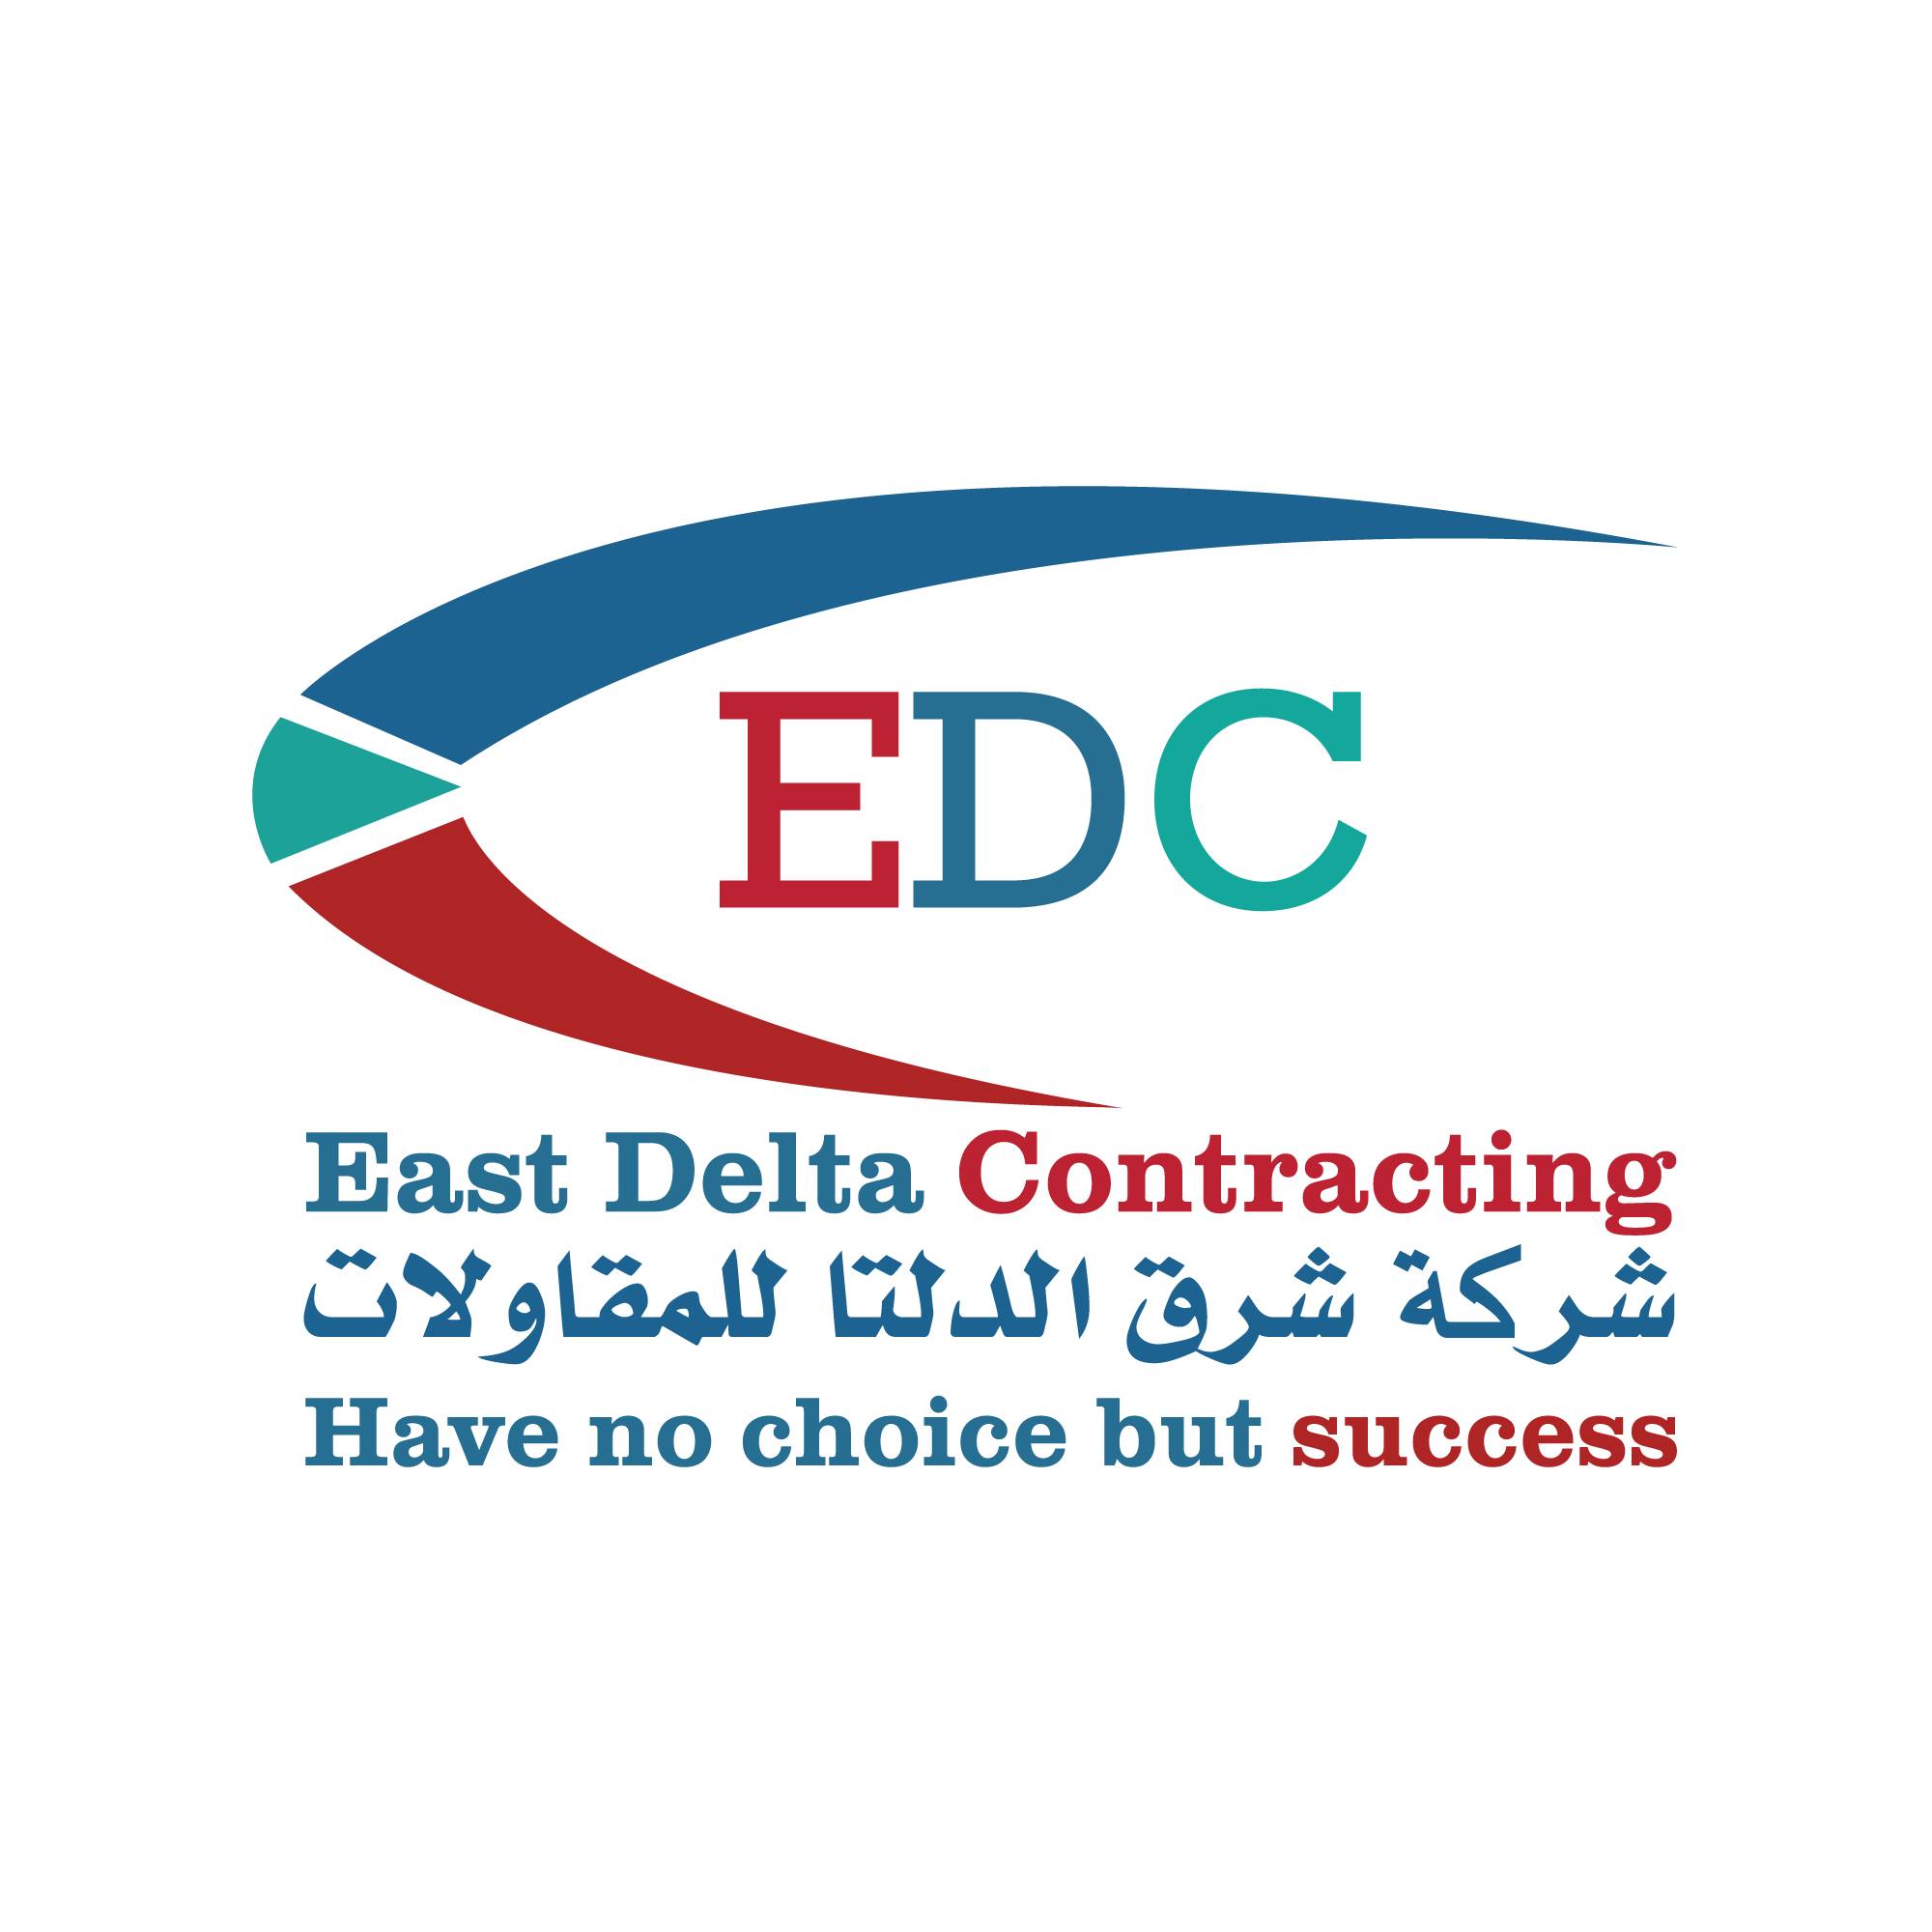 East Delta Contracting